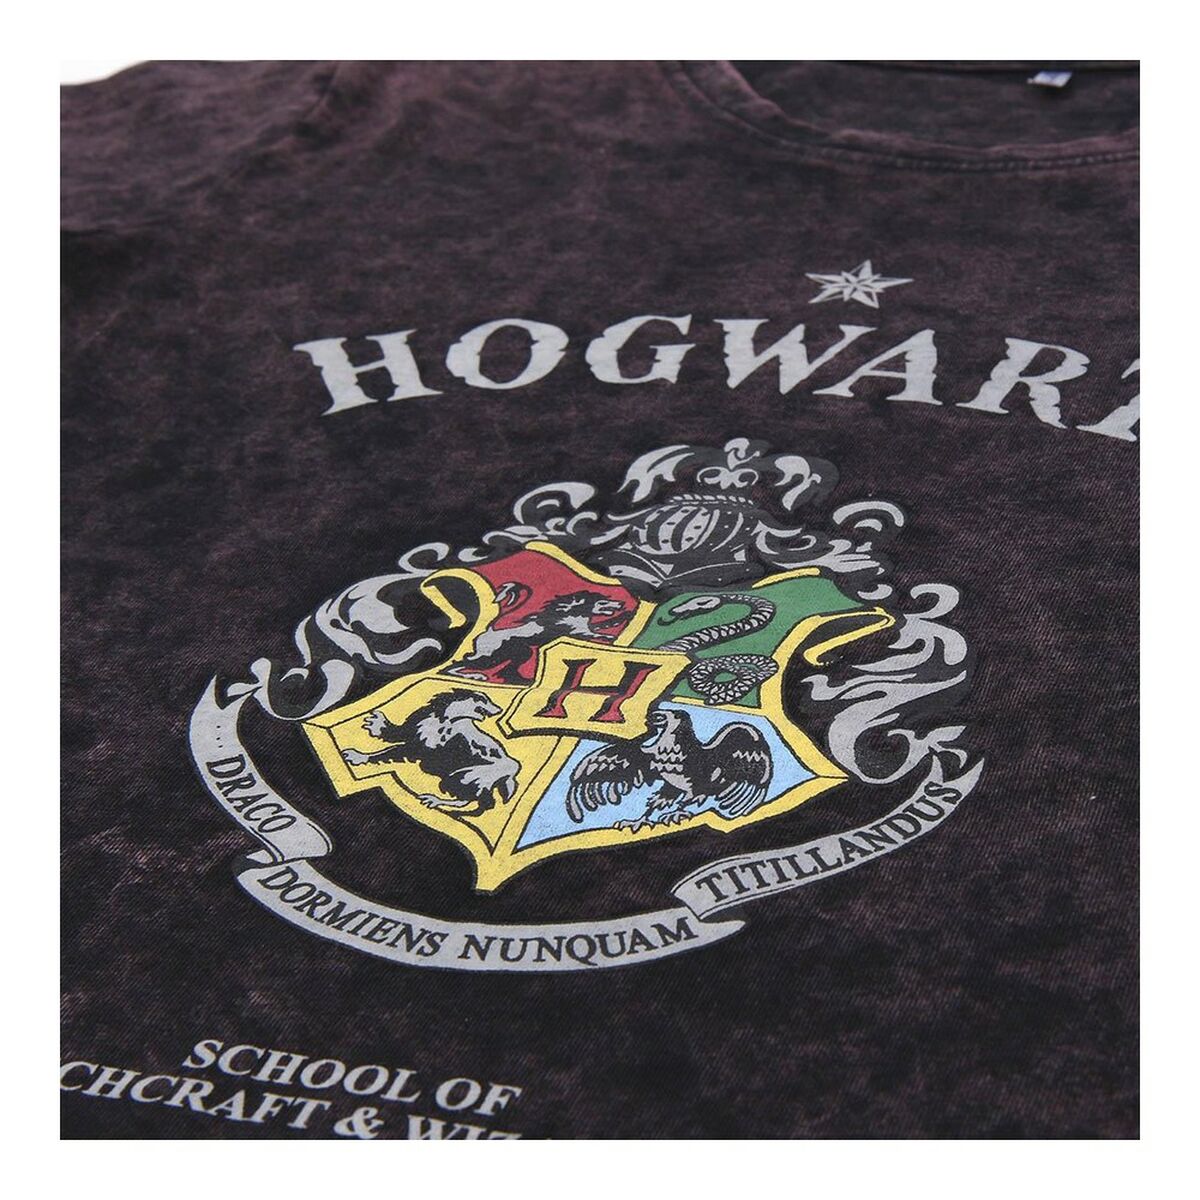 Camiseta de Manga Larga Infantil Harry Potter Gris oscuro